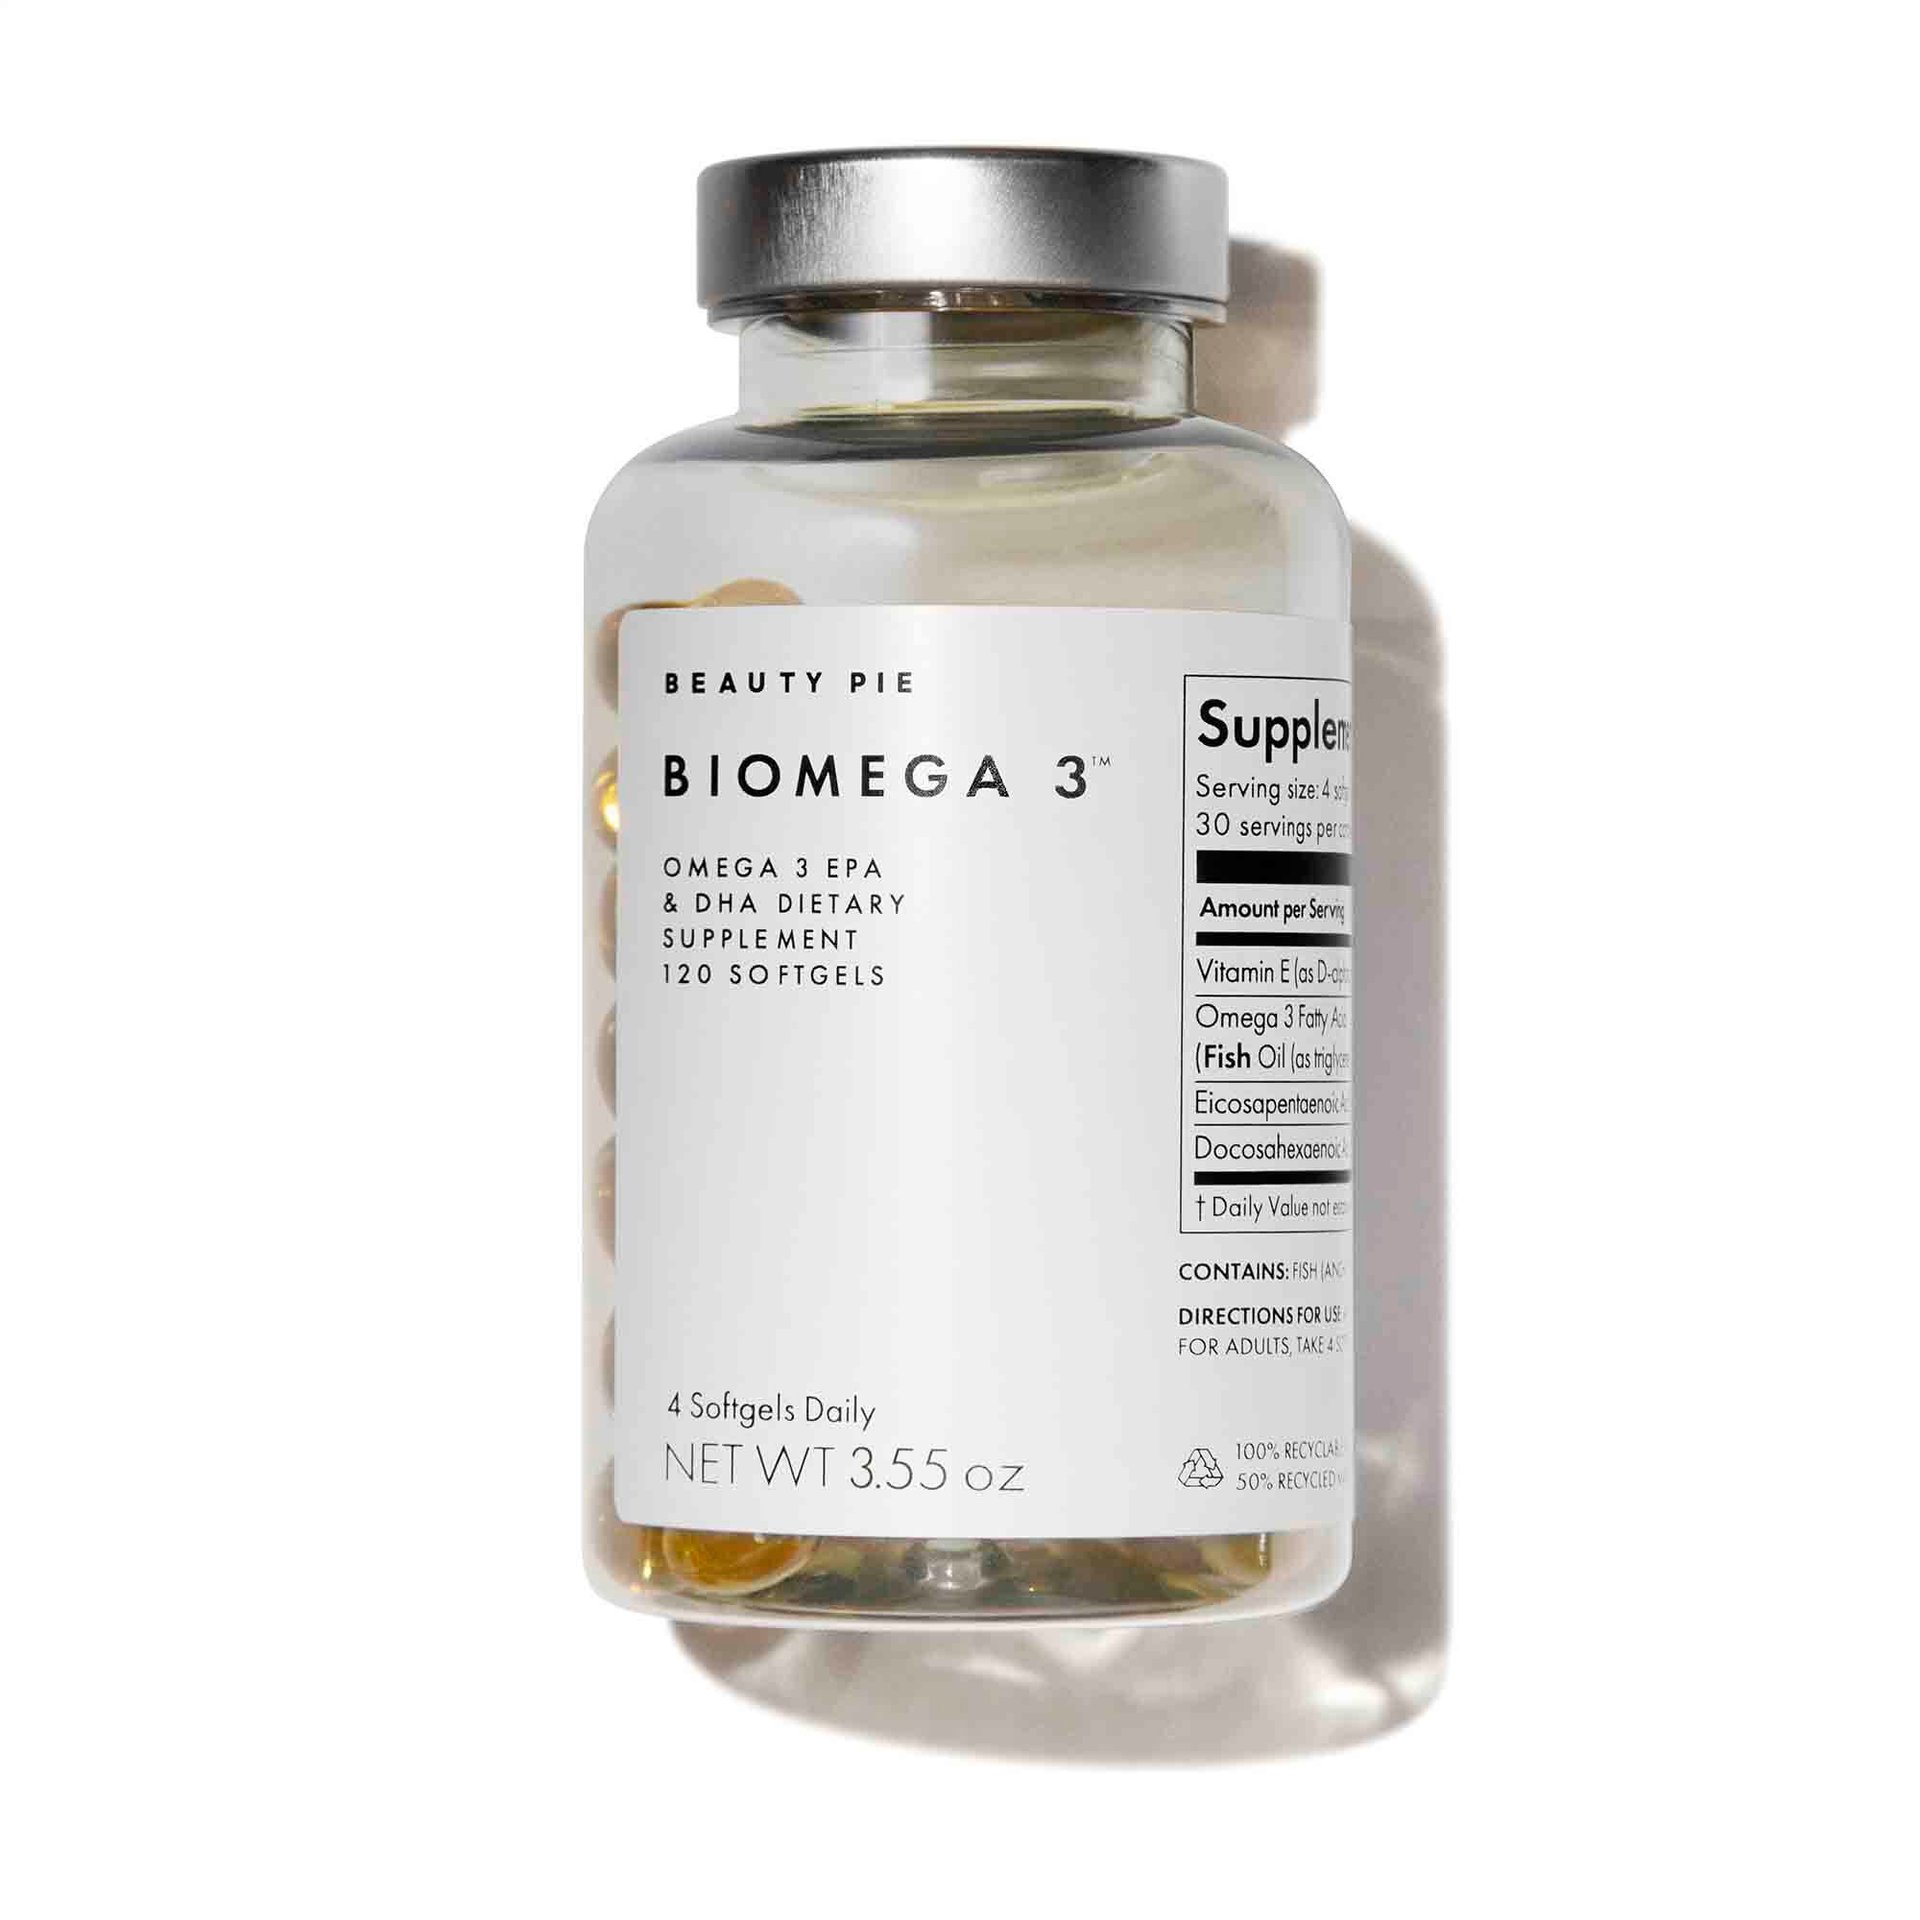 Biomega 3™ Omega 3 EPA & DHA Dietary Supplement